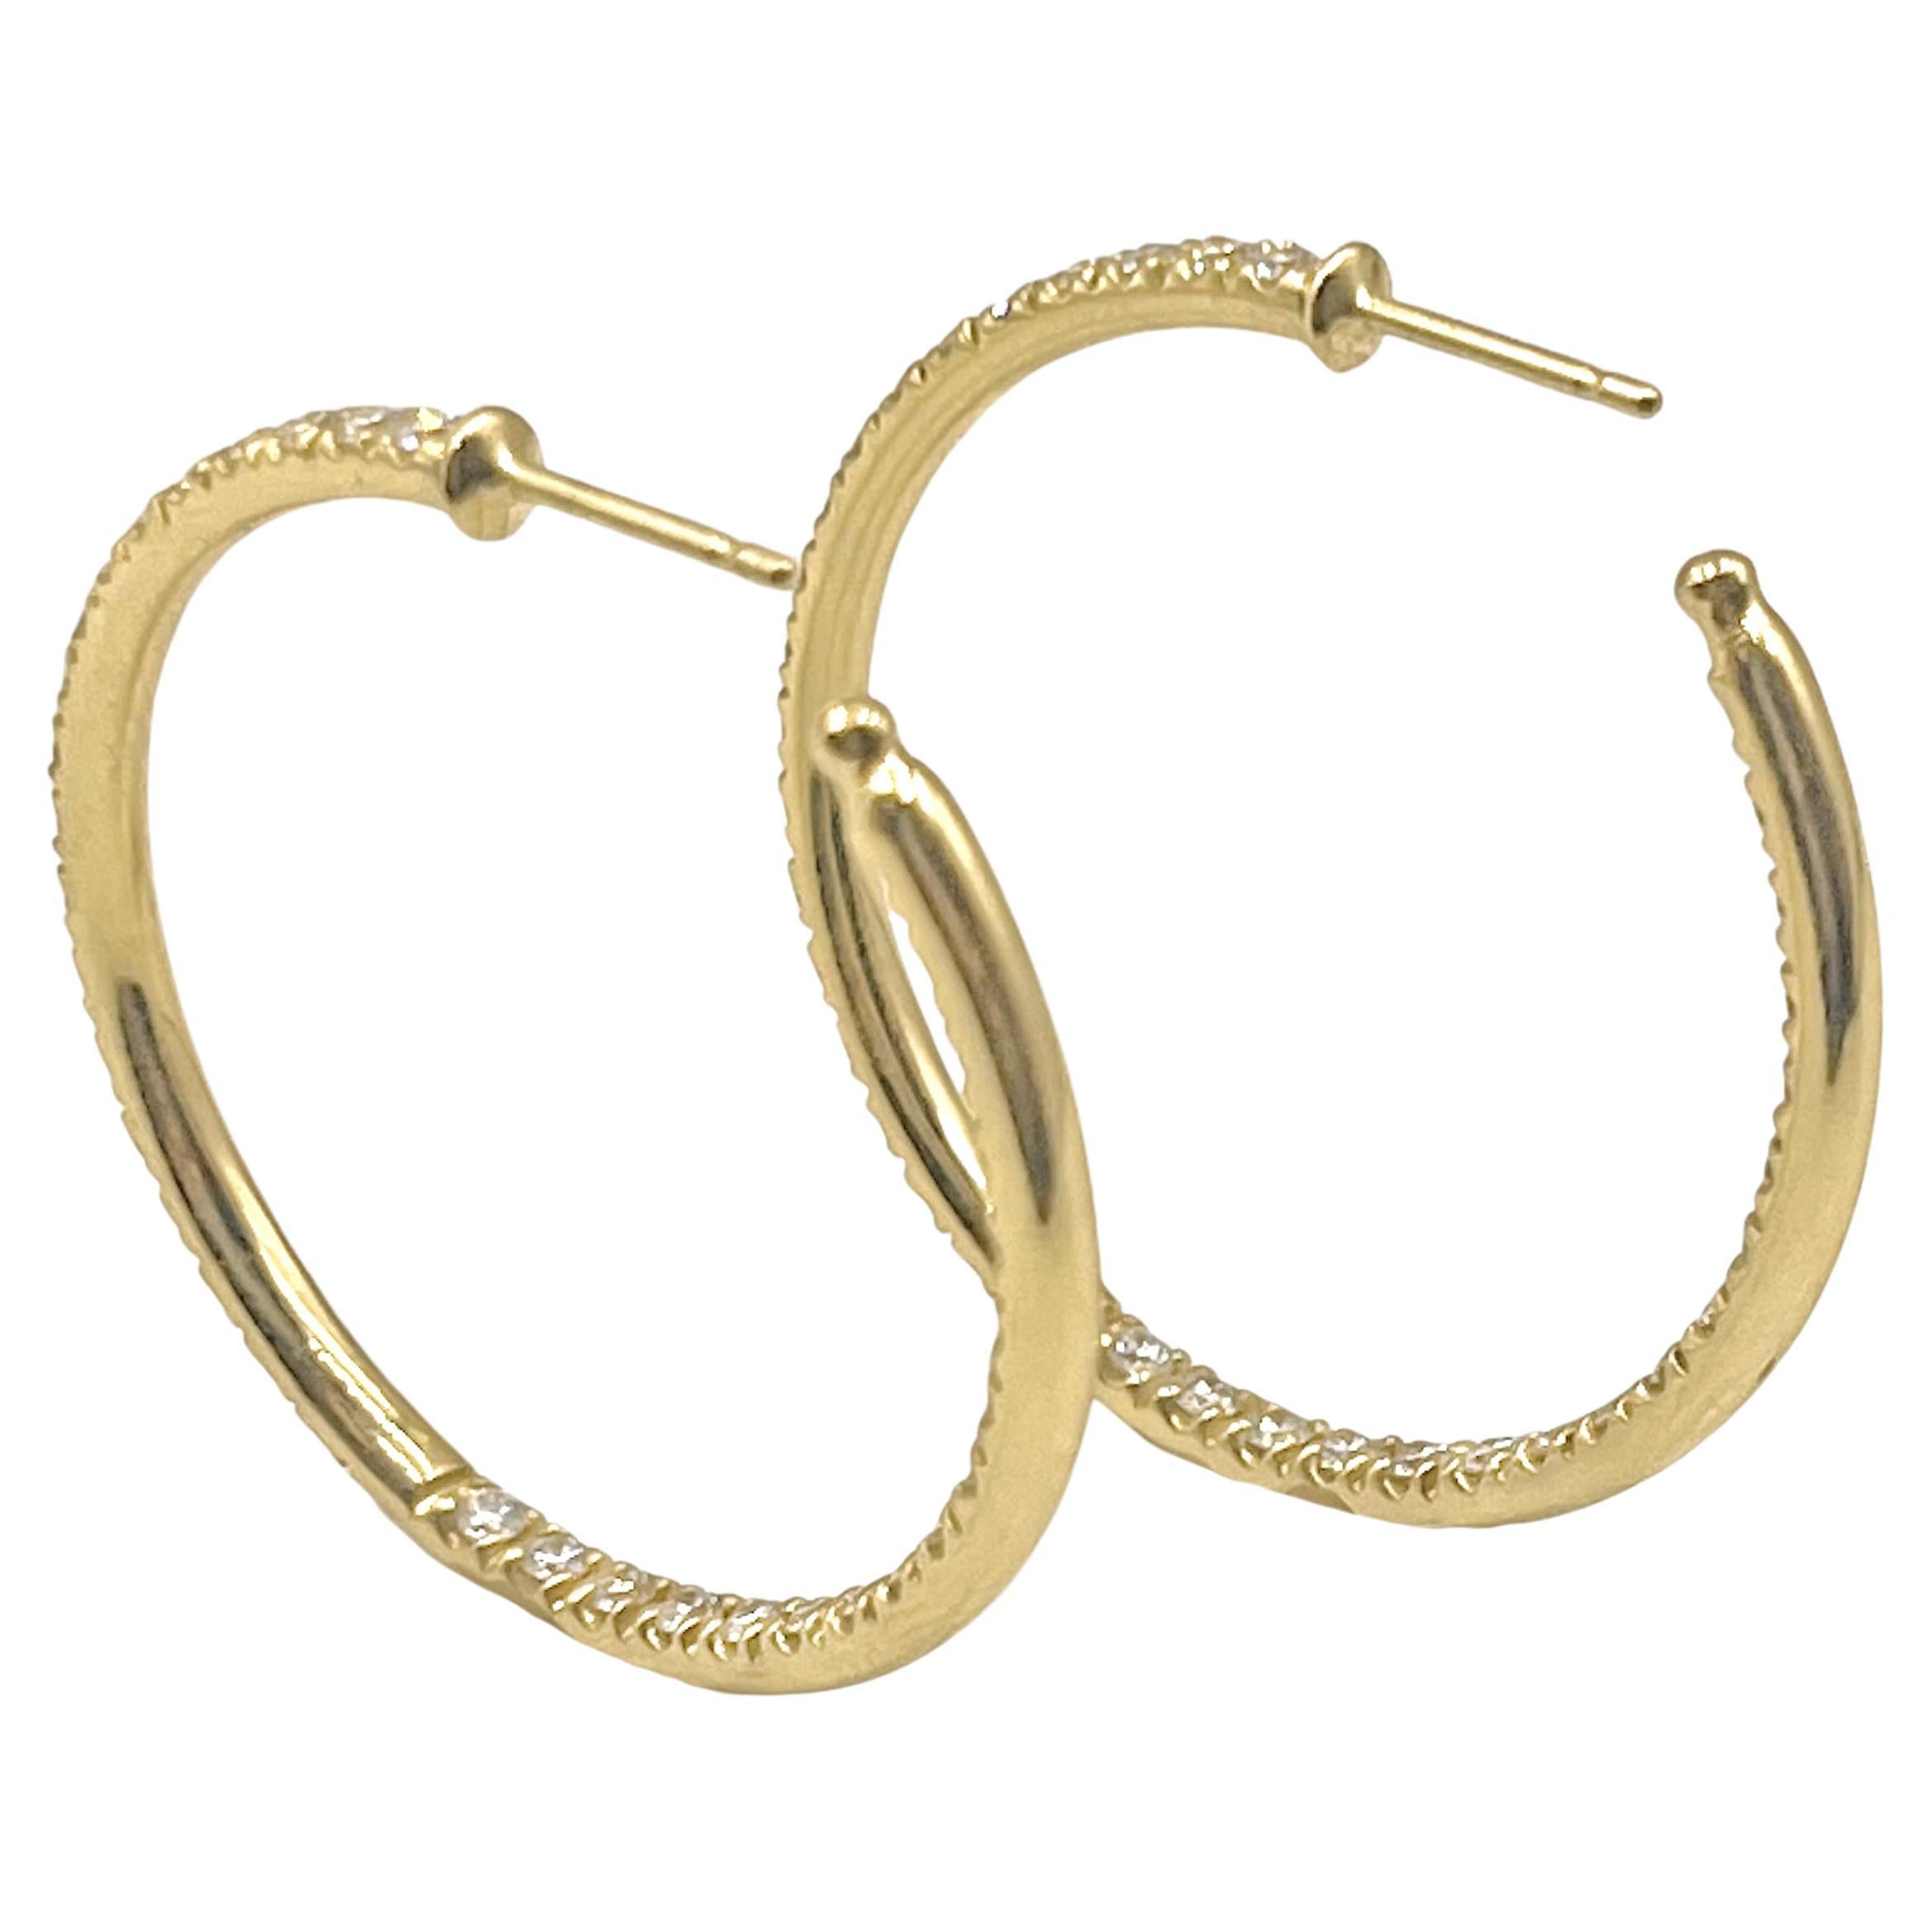 Brilliant Cut 1.85ct Diamond 18kt Yellow Gold Hoop Earrings